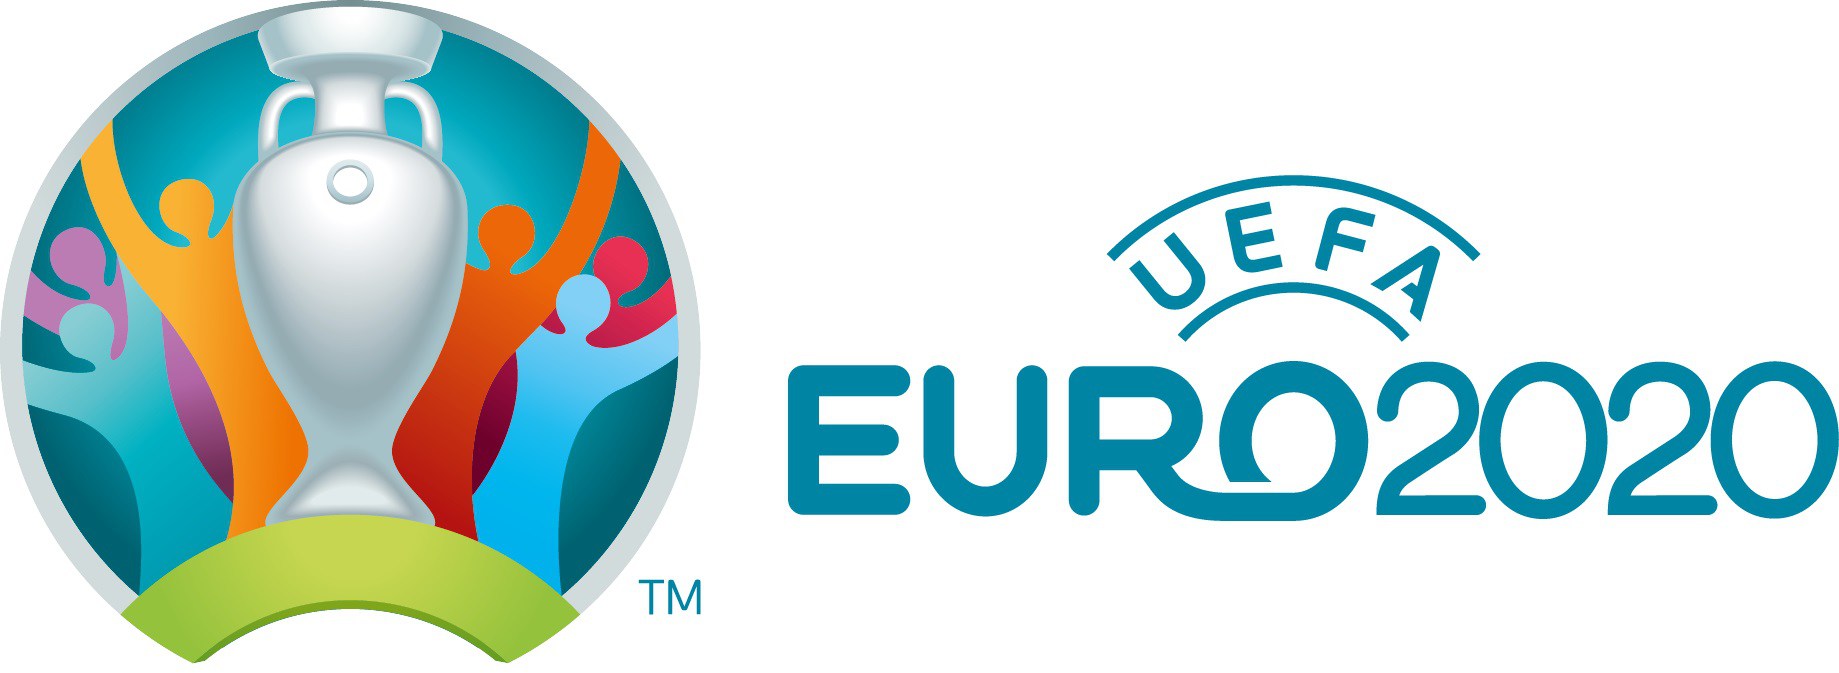 Creative Action | Euro 2020 Identity Unveiled